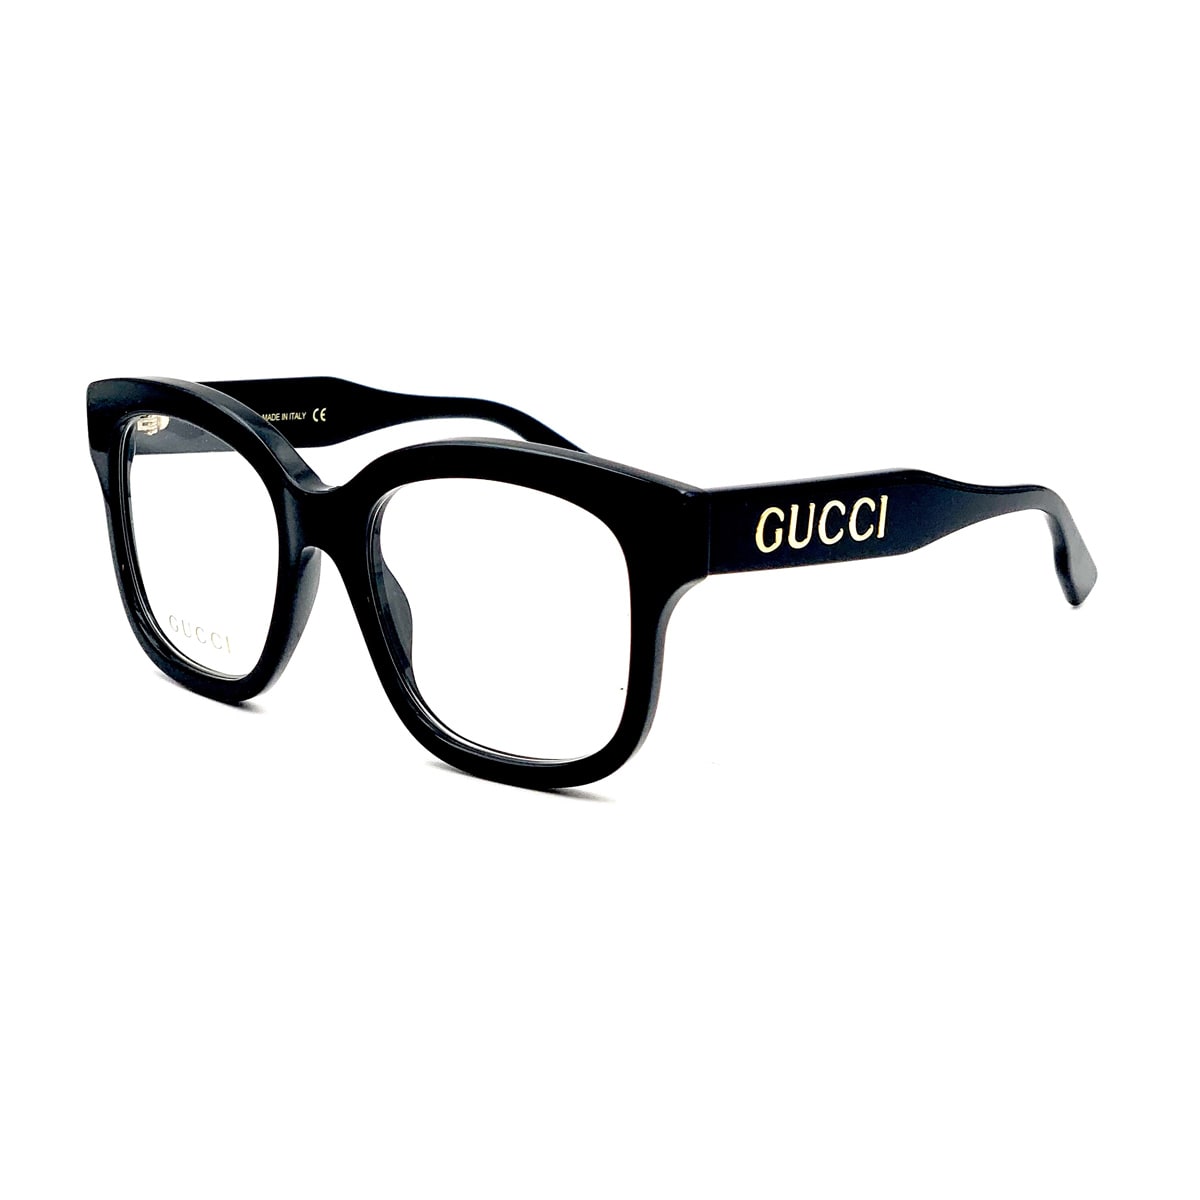 Gucci Eyewear Gg1155o Glasses